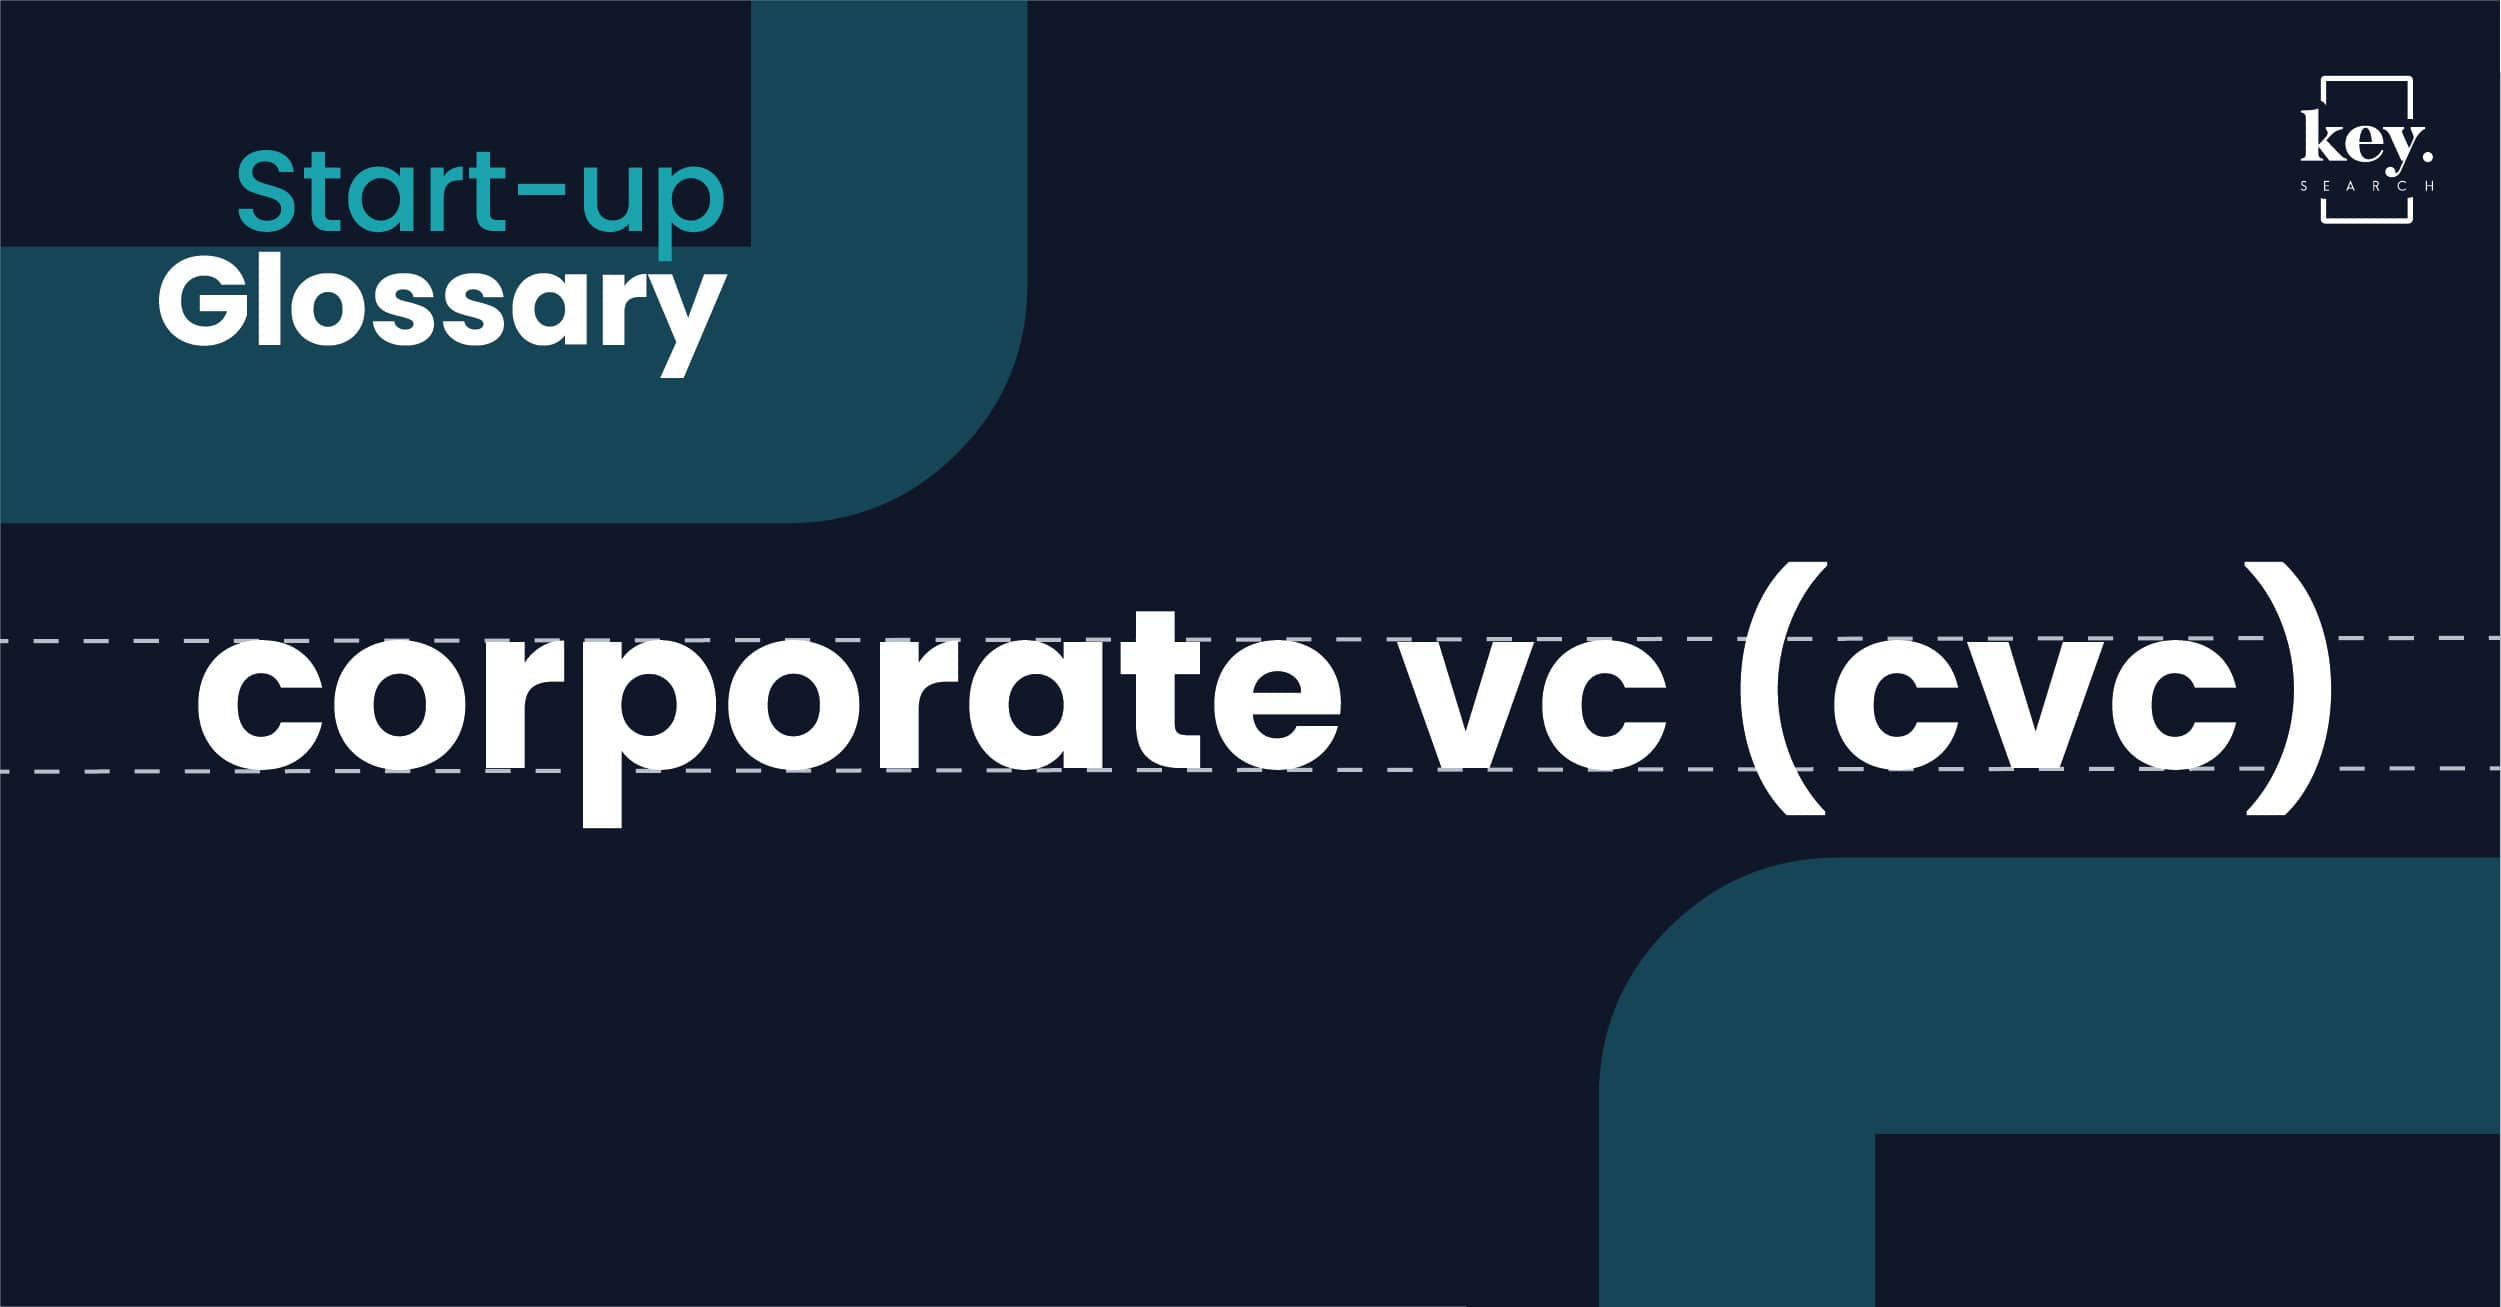 Start-up Glossary_corporate vc (cvc)